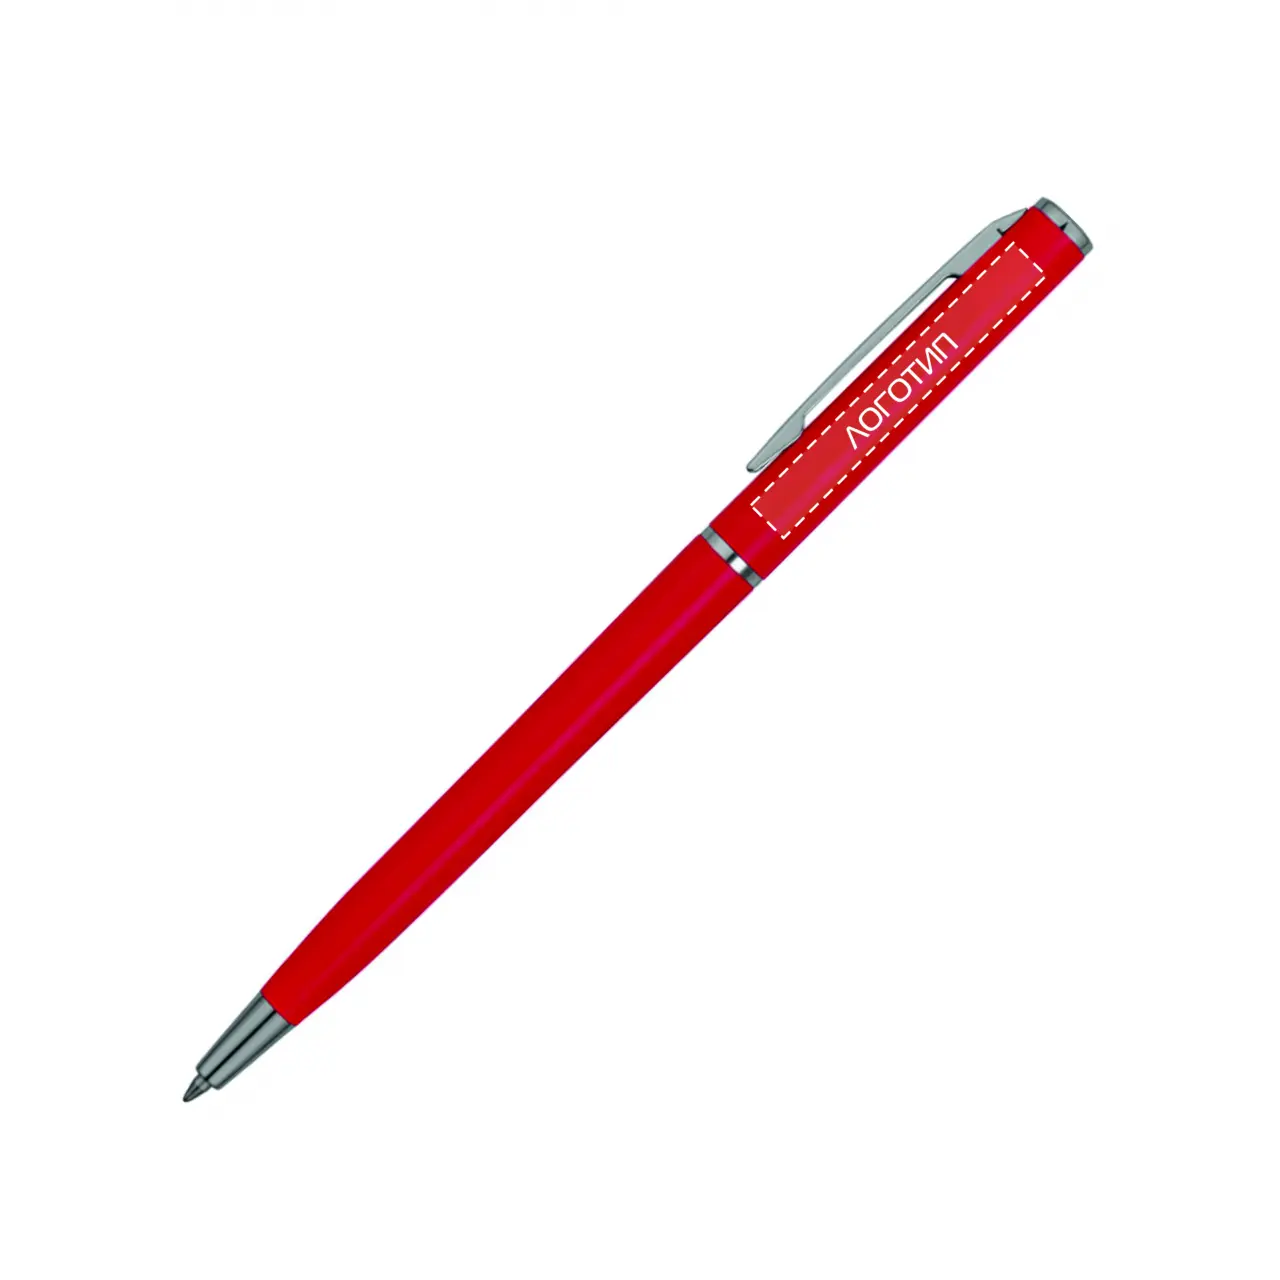 Ручка с логотипом (Наварра)